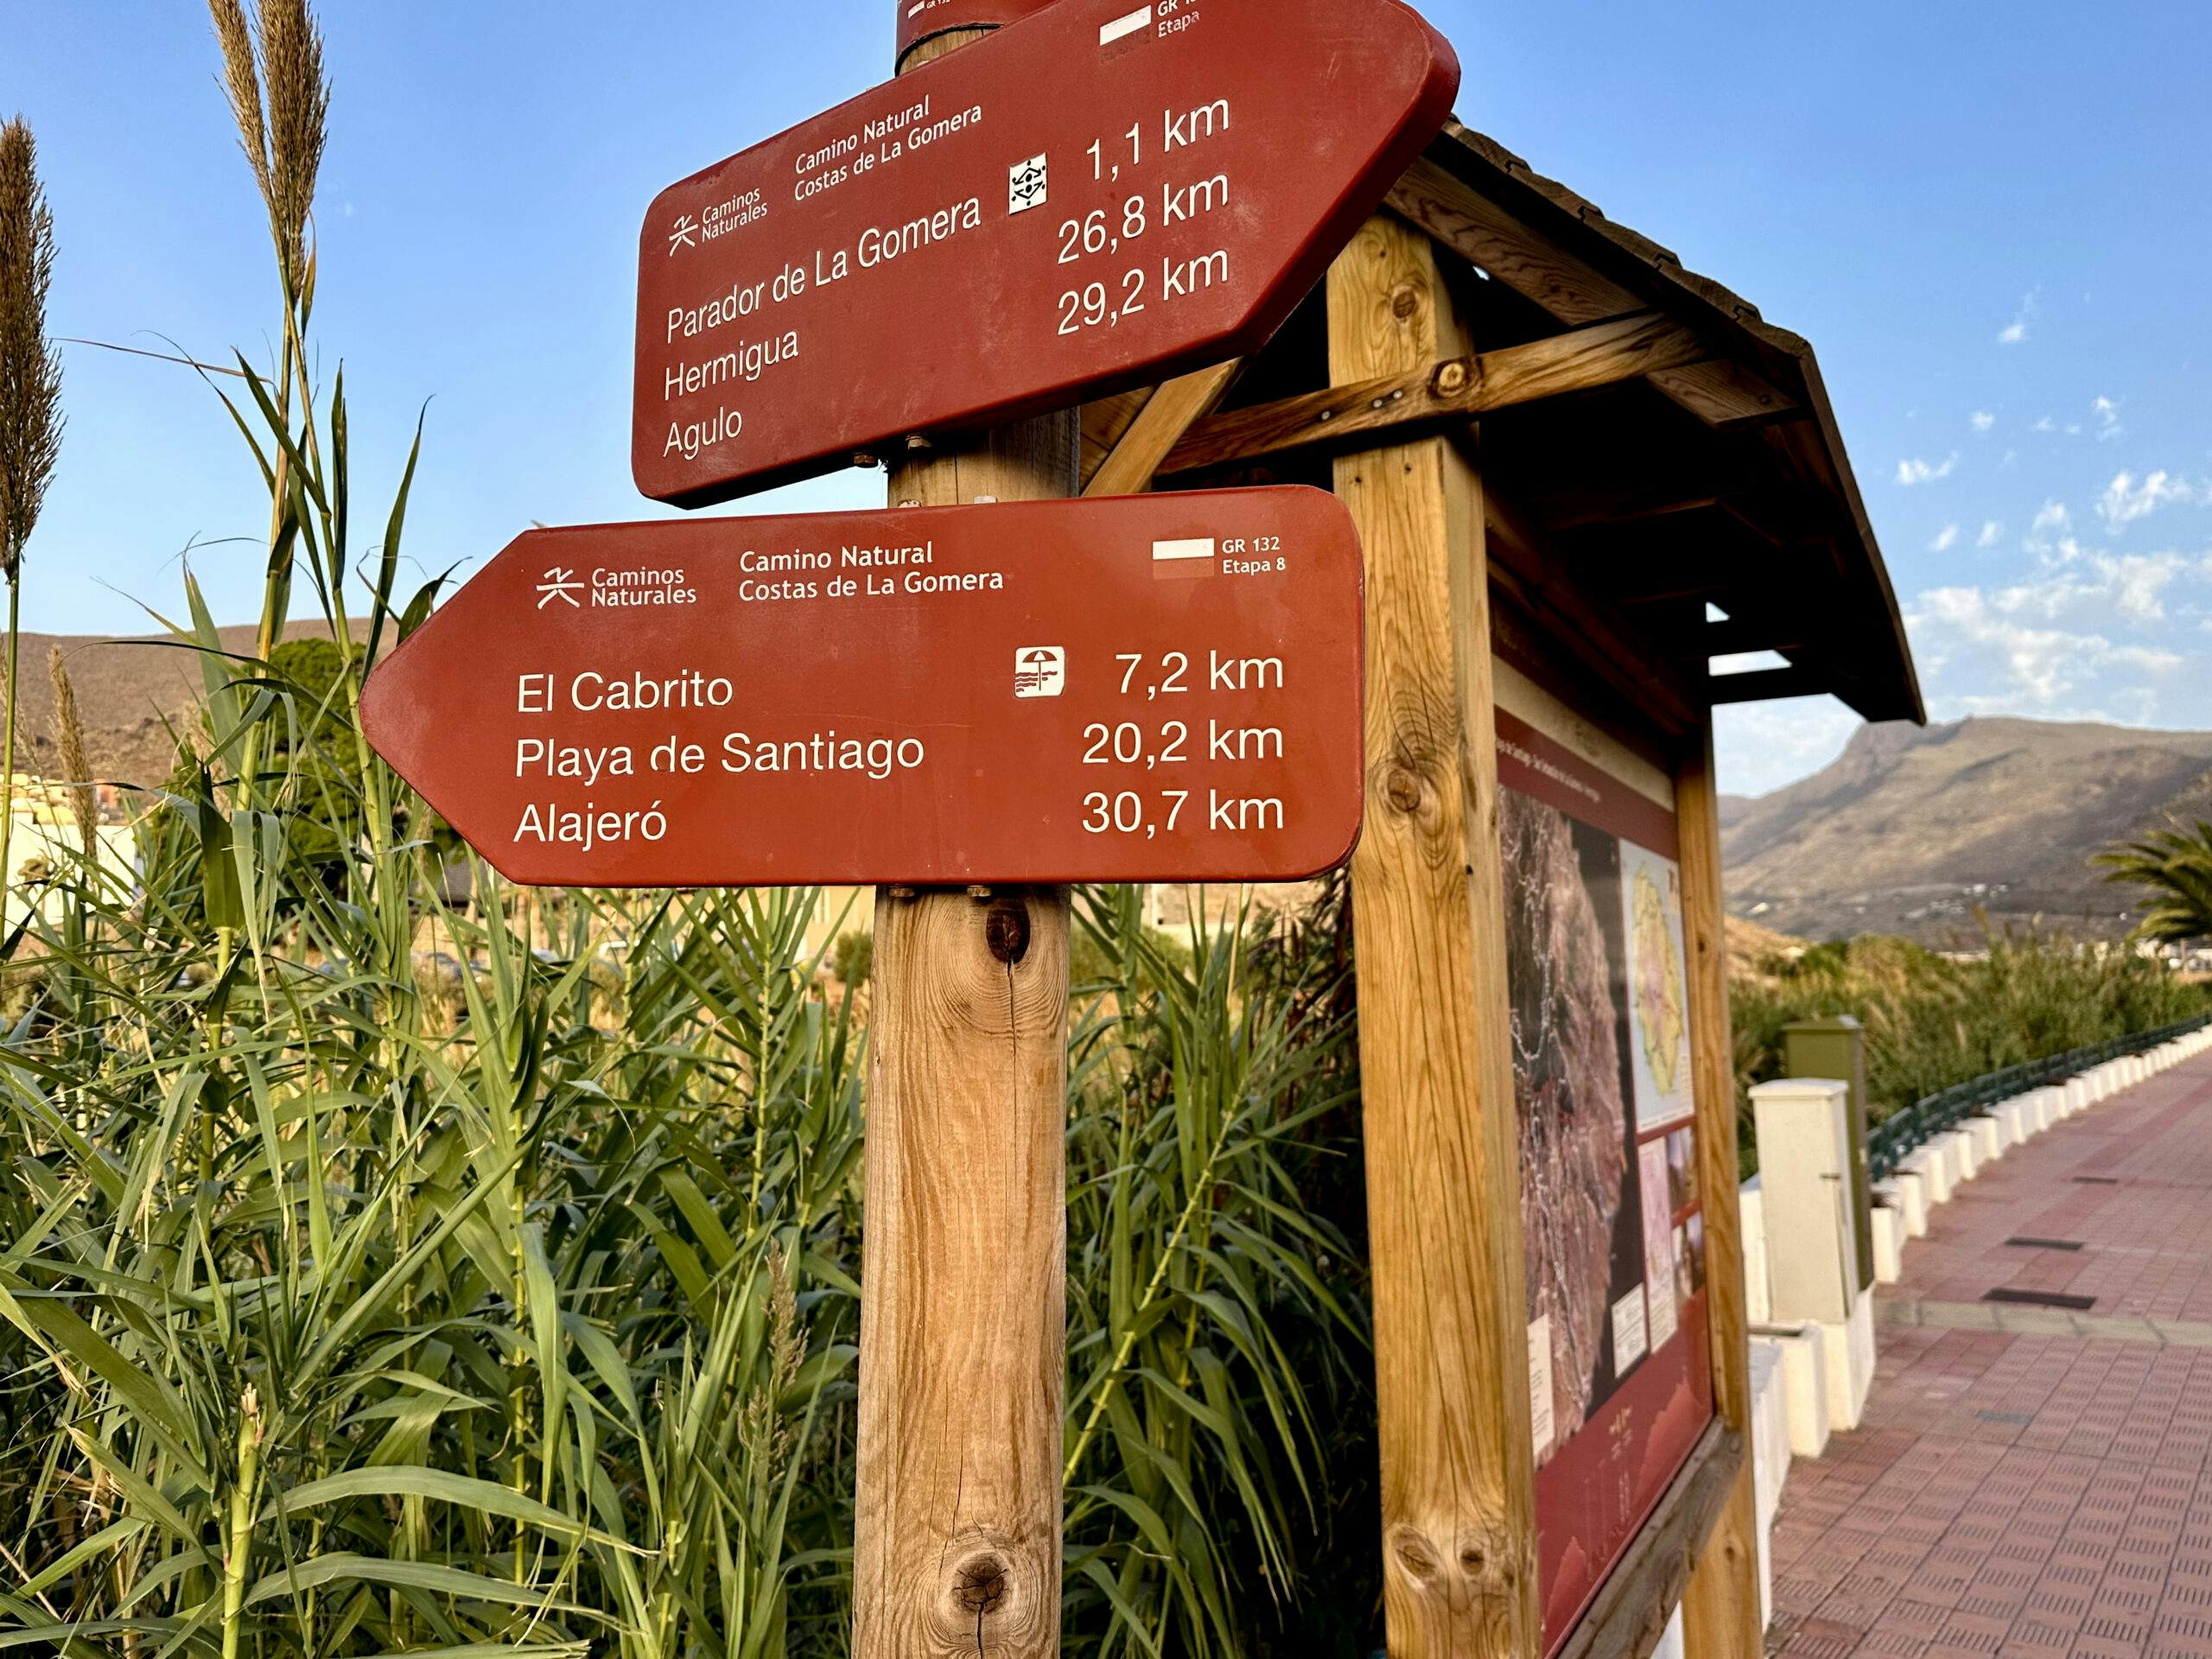 Hiking signs on the GR-132 stage 8 Camino Natural Costas de La Gomera